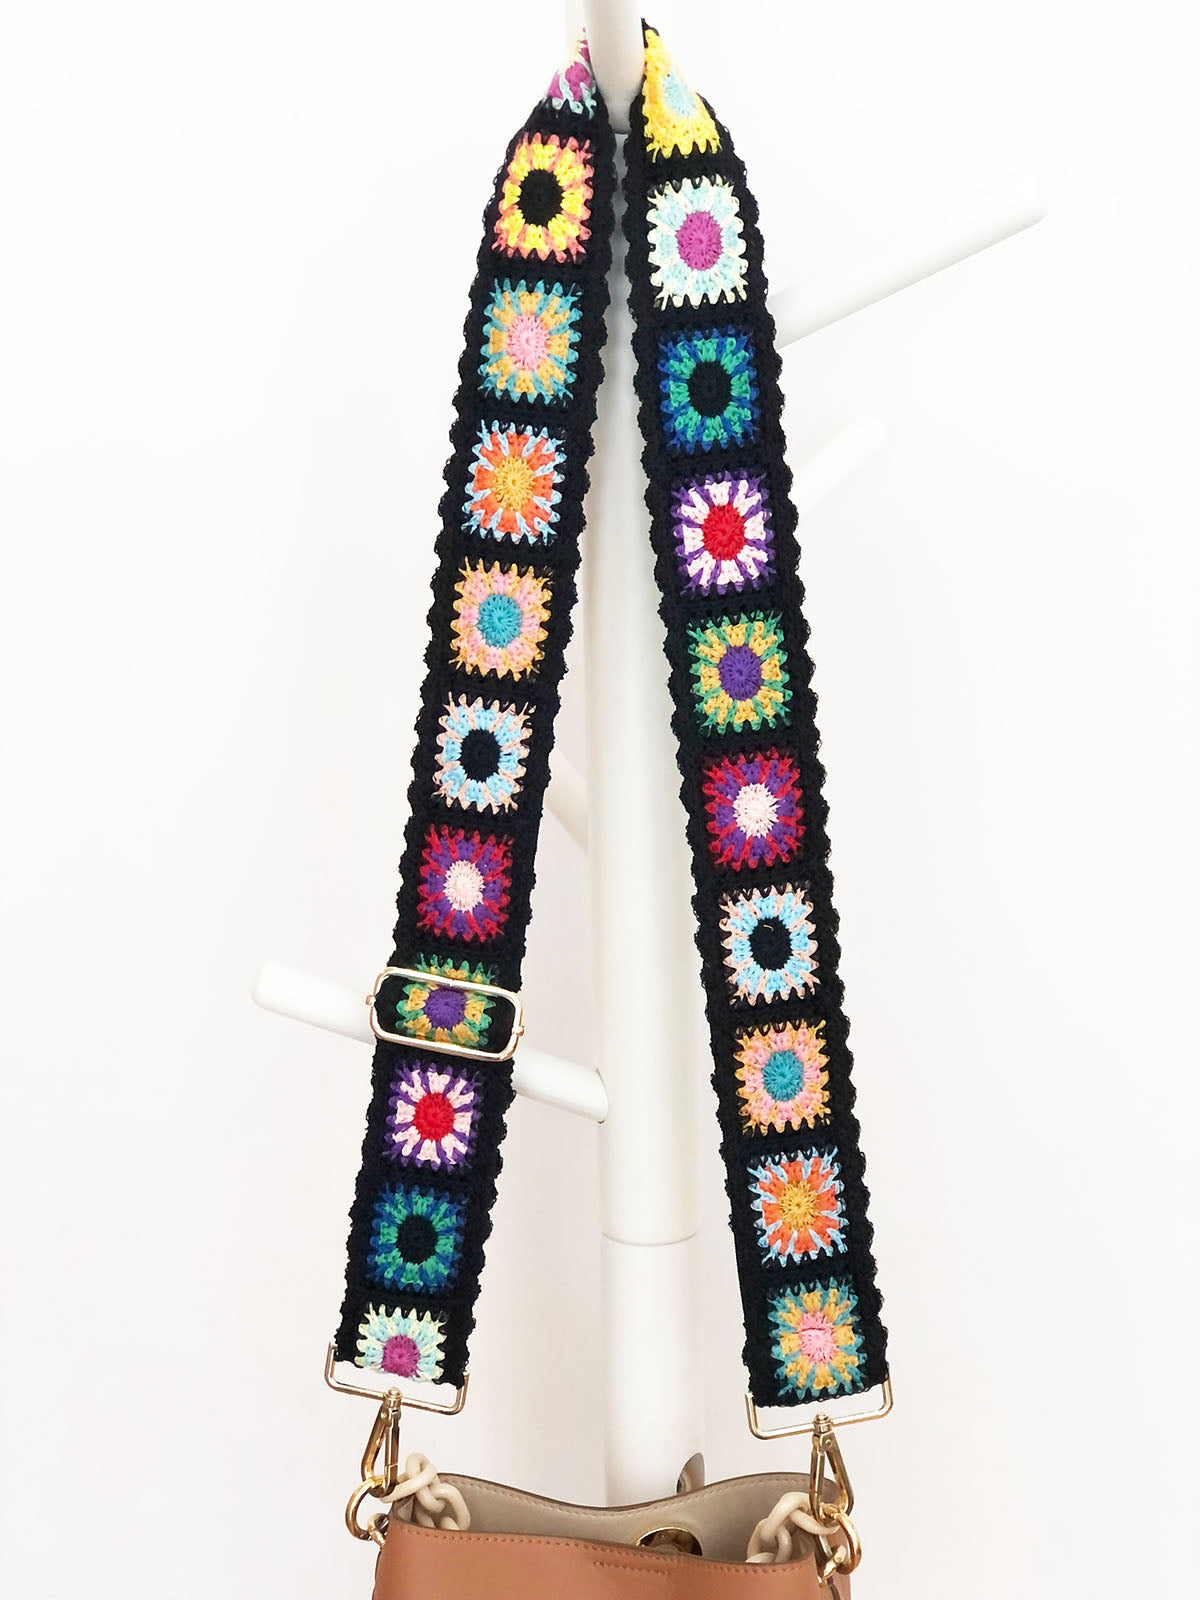 Crochet Flower Purse Straps Replacement Crossbody for Handbags Women Guitar Strap 2 inch Wide Adjustable Bag Strap (Black)